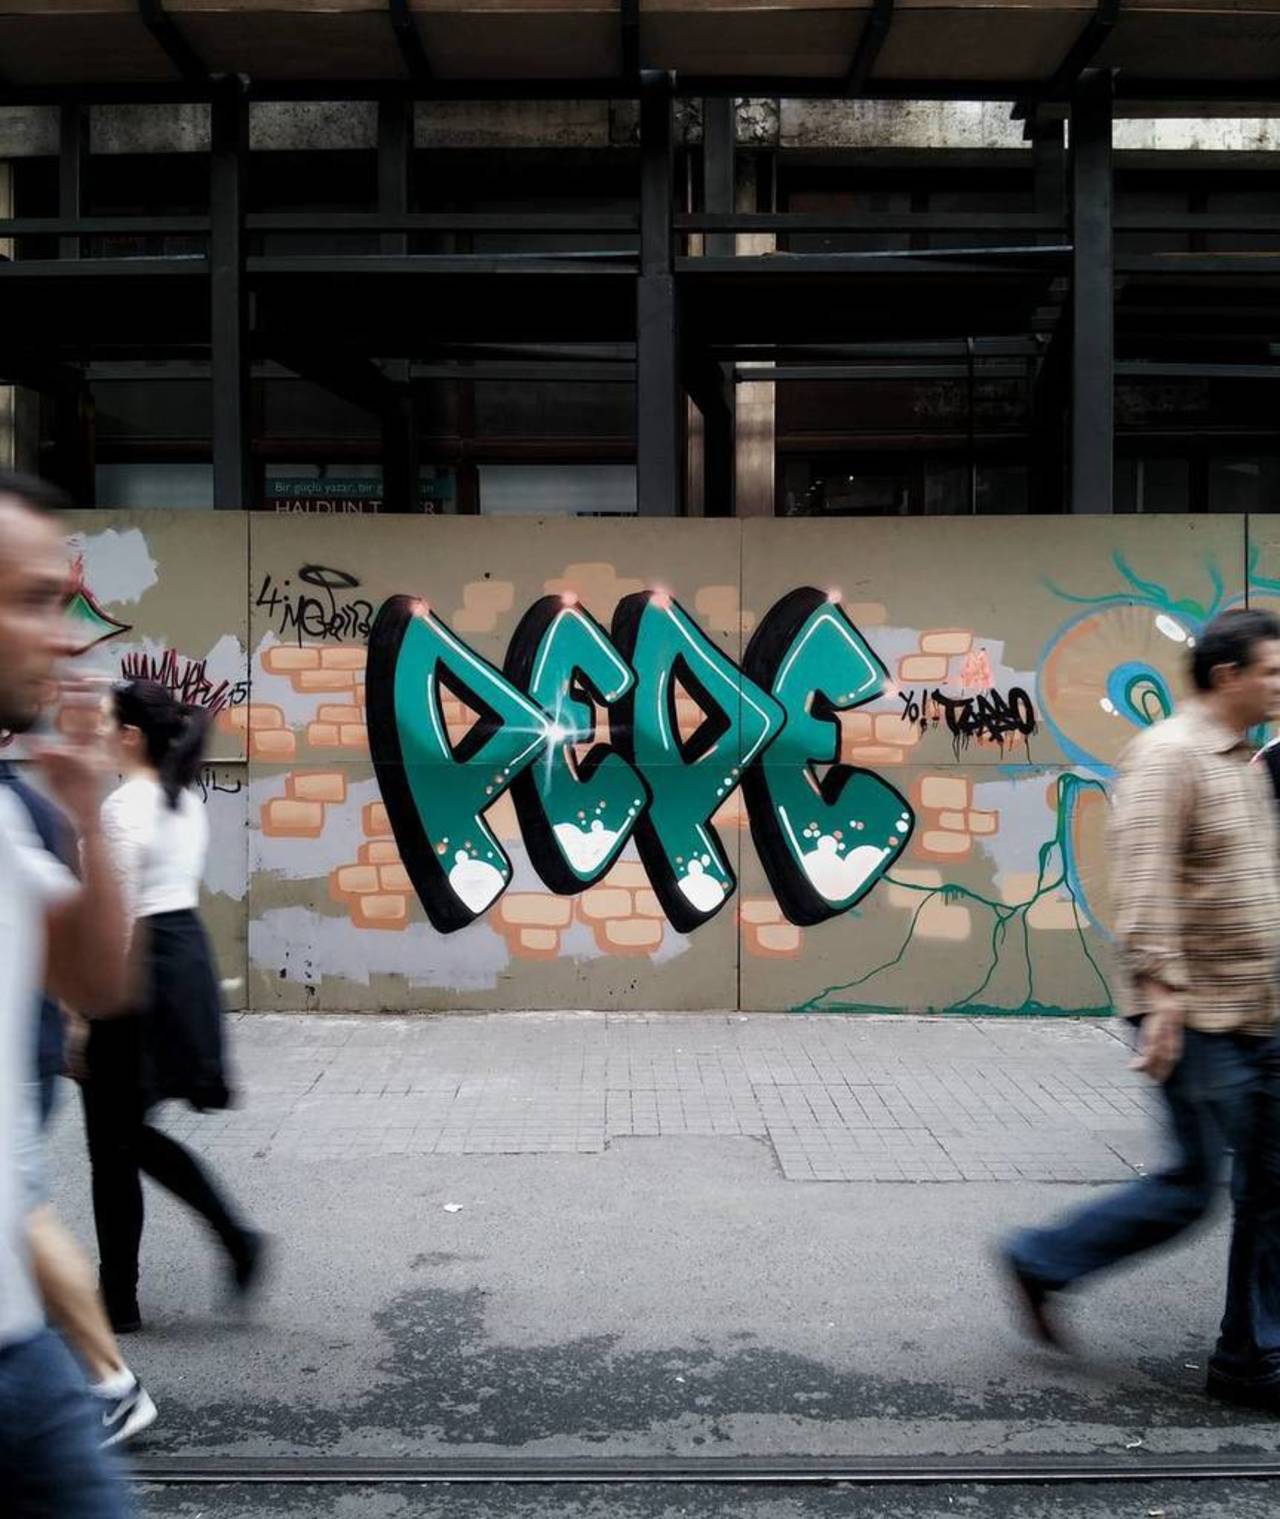 Rengimi kaybettim...
#iyiakşamlar #graffiti #pepemodeon #streetart #urbanart #sprayart #streetphotography #wall #s… http://t.co/8pUMJpj1n0